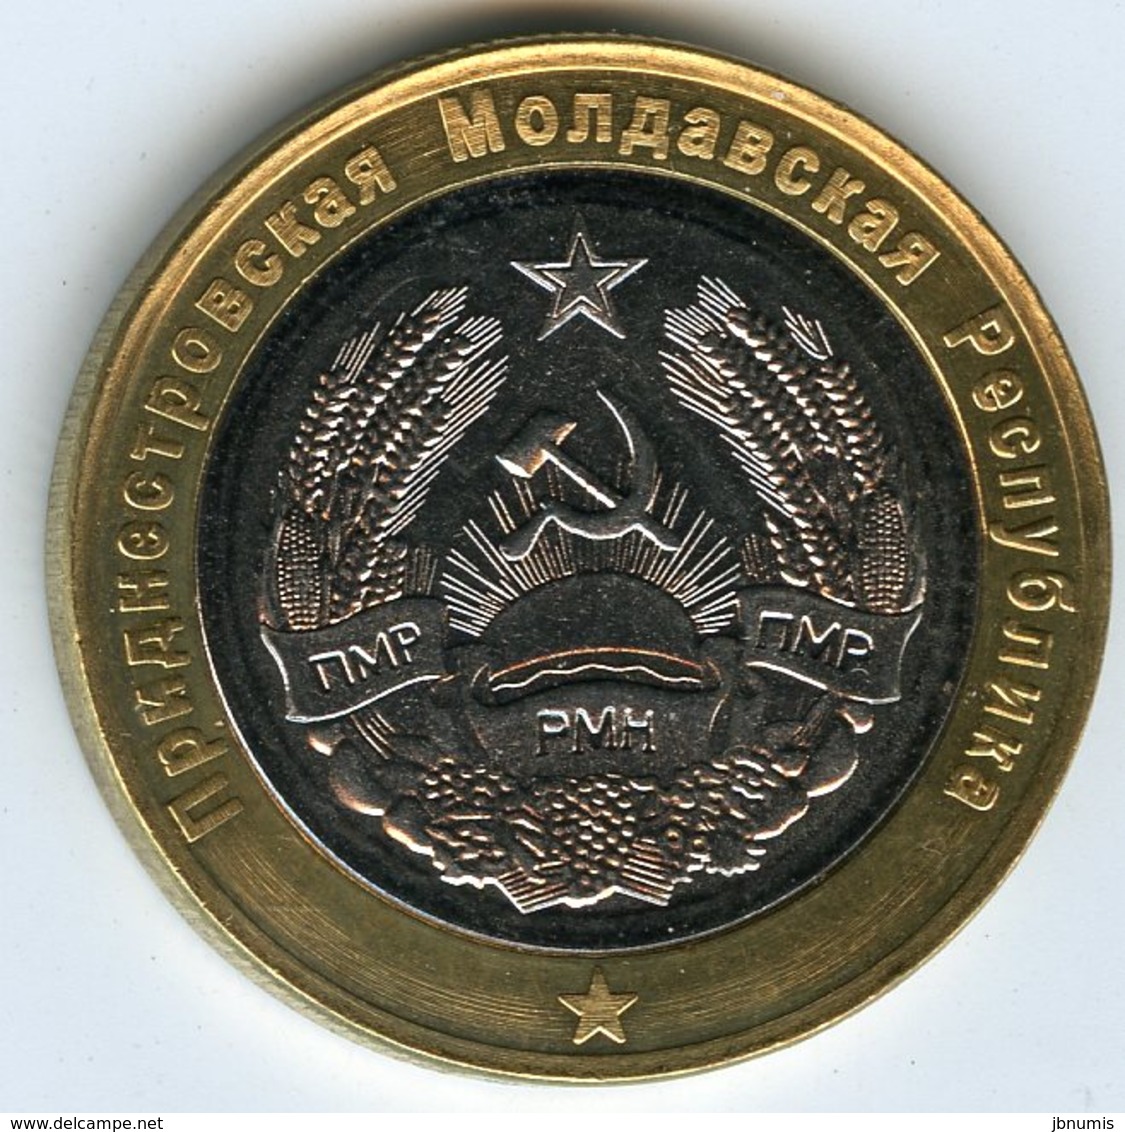 Moldavie Moldova Transdniestrie Transdnistria 100 Rublei 2011 Jean-Paul II Pape Pope UNC - Moldova